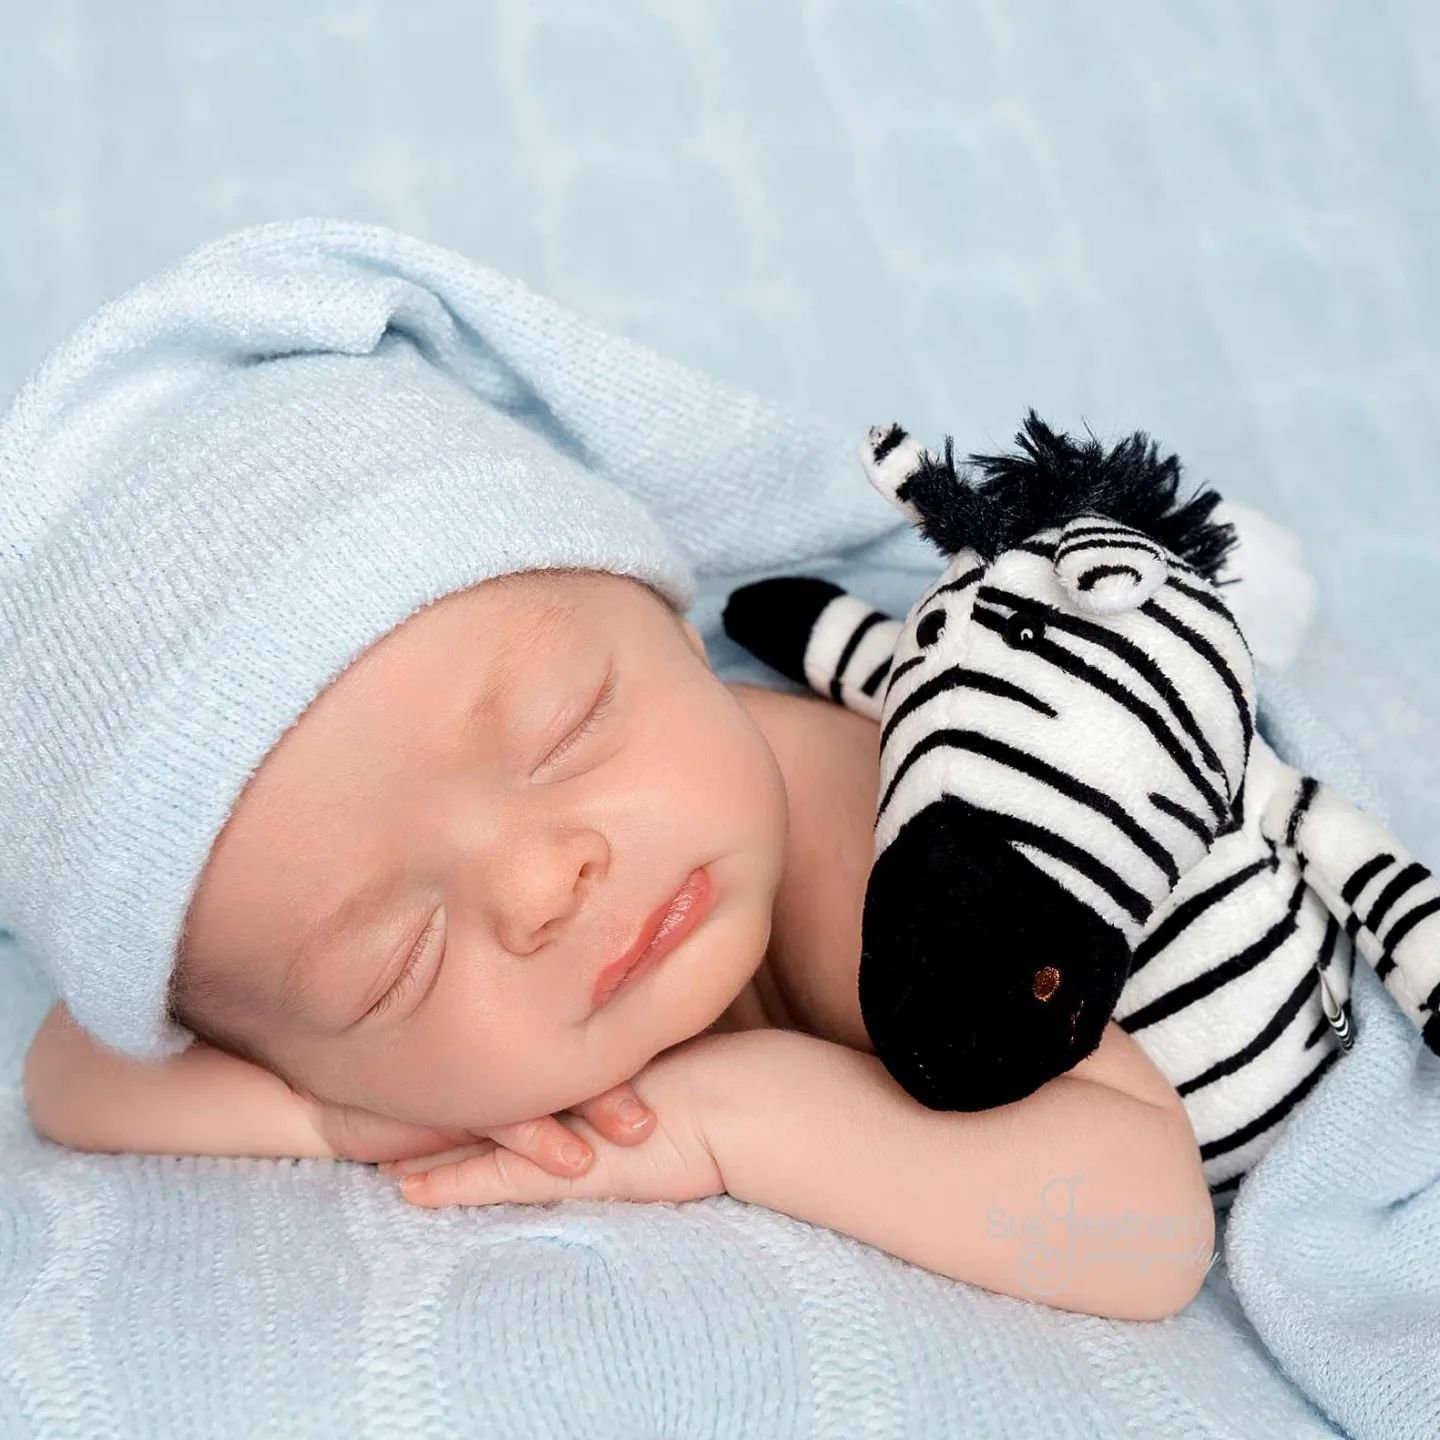 Just a baby boy and his favourite zebra 🩵

#newborn #newbaby #newbabyboy #newbornlove #babyboy #littleprince #newbornsession #newbornshoot #newbornphotohraphy #blue #babyblue #pastelblue #favouritetoy #bestfriends #myboy #myheart #magicmoments #trea